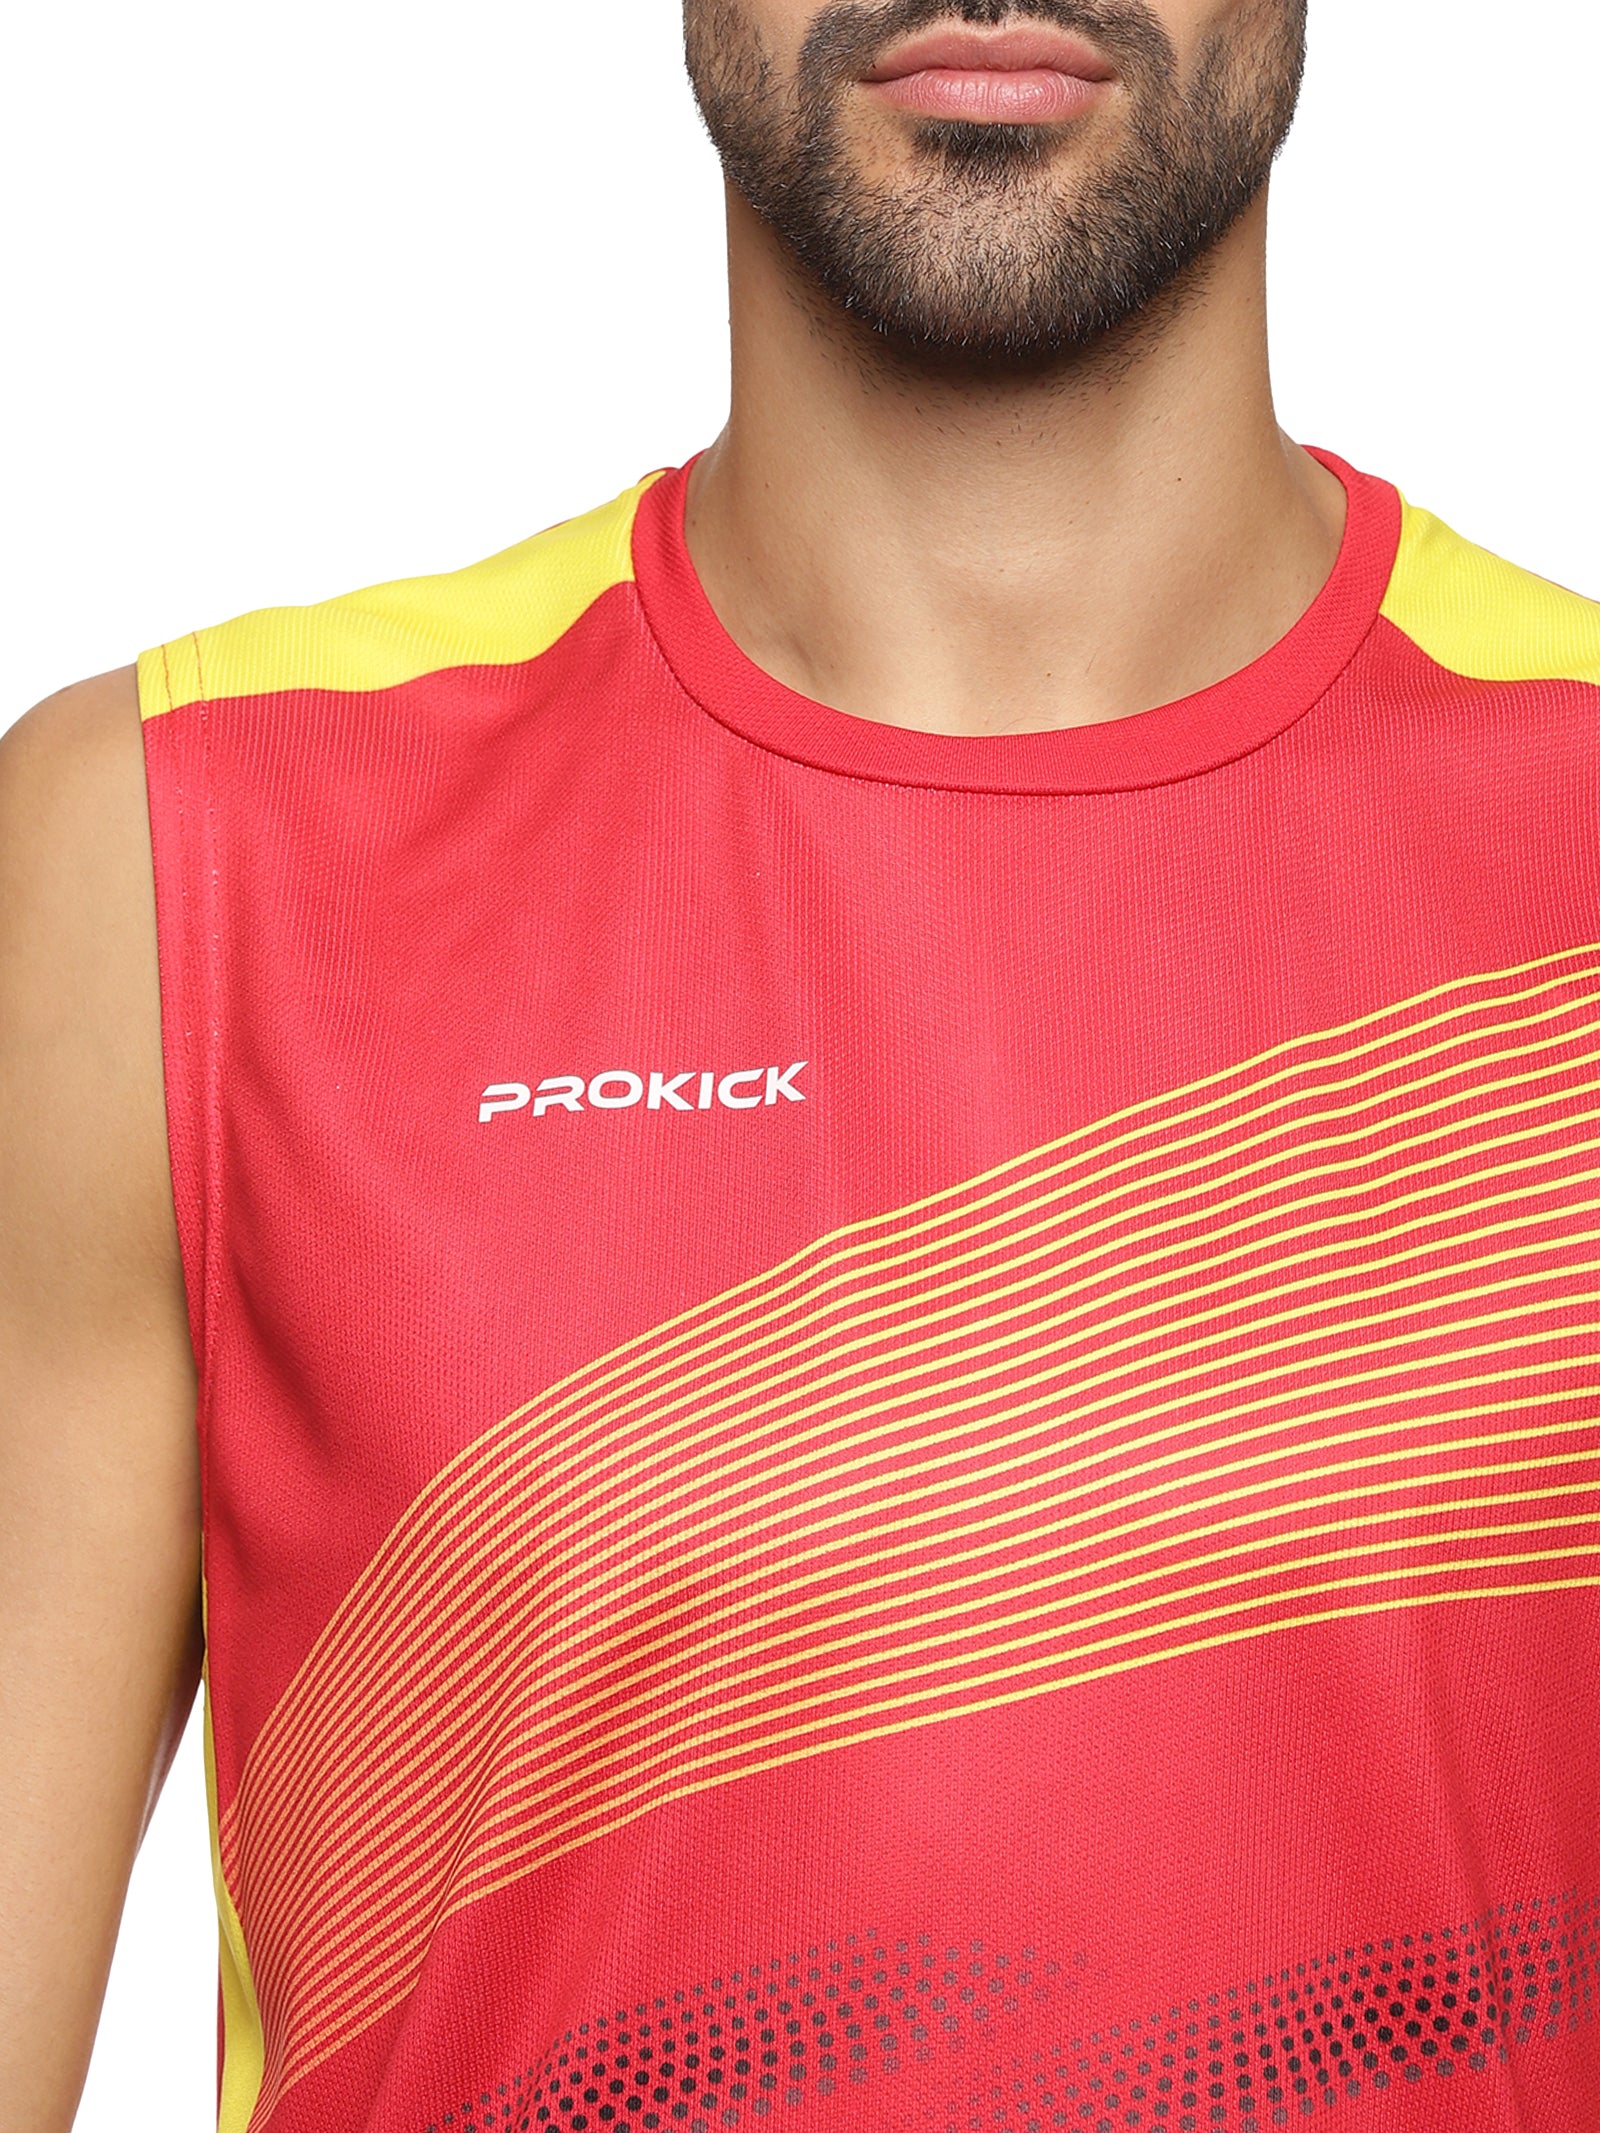 Prokick RNT-SL002 Sleeveless Sports Tshirt - Best Price online Prokicksports.com